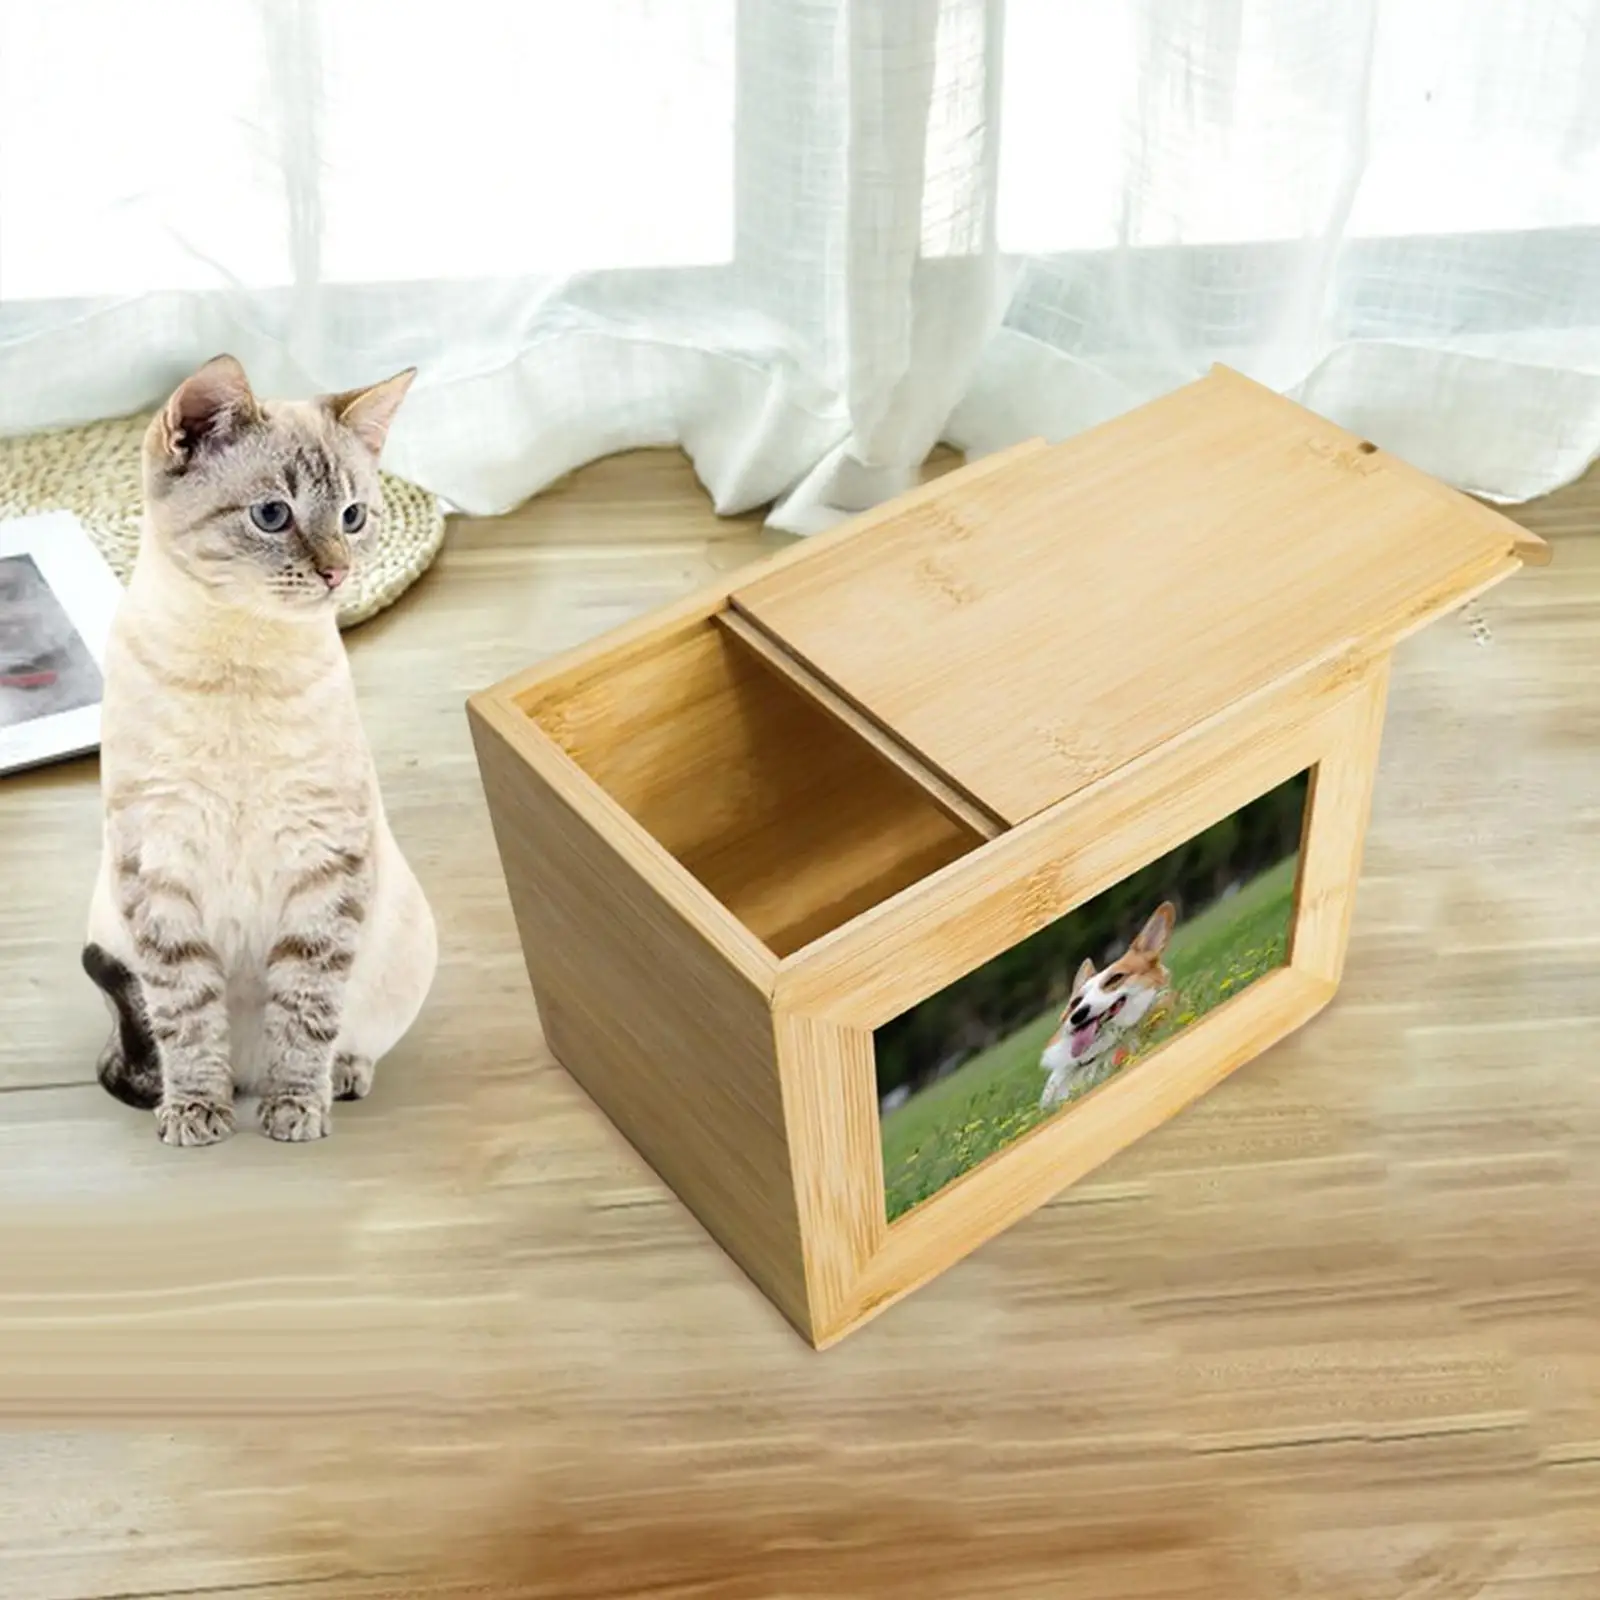 Wooden Pet Urns Loose Memorial Pets Gift Photo Frame Storage Organizer